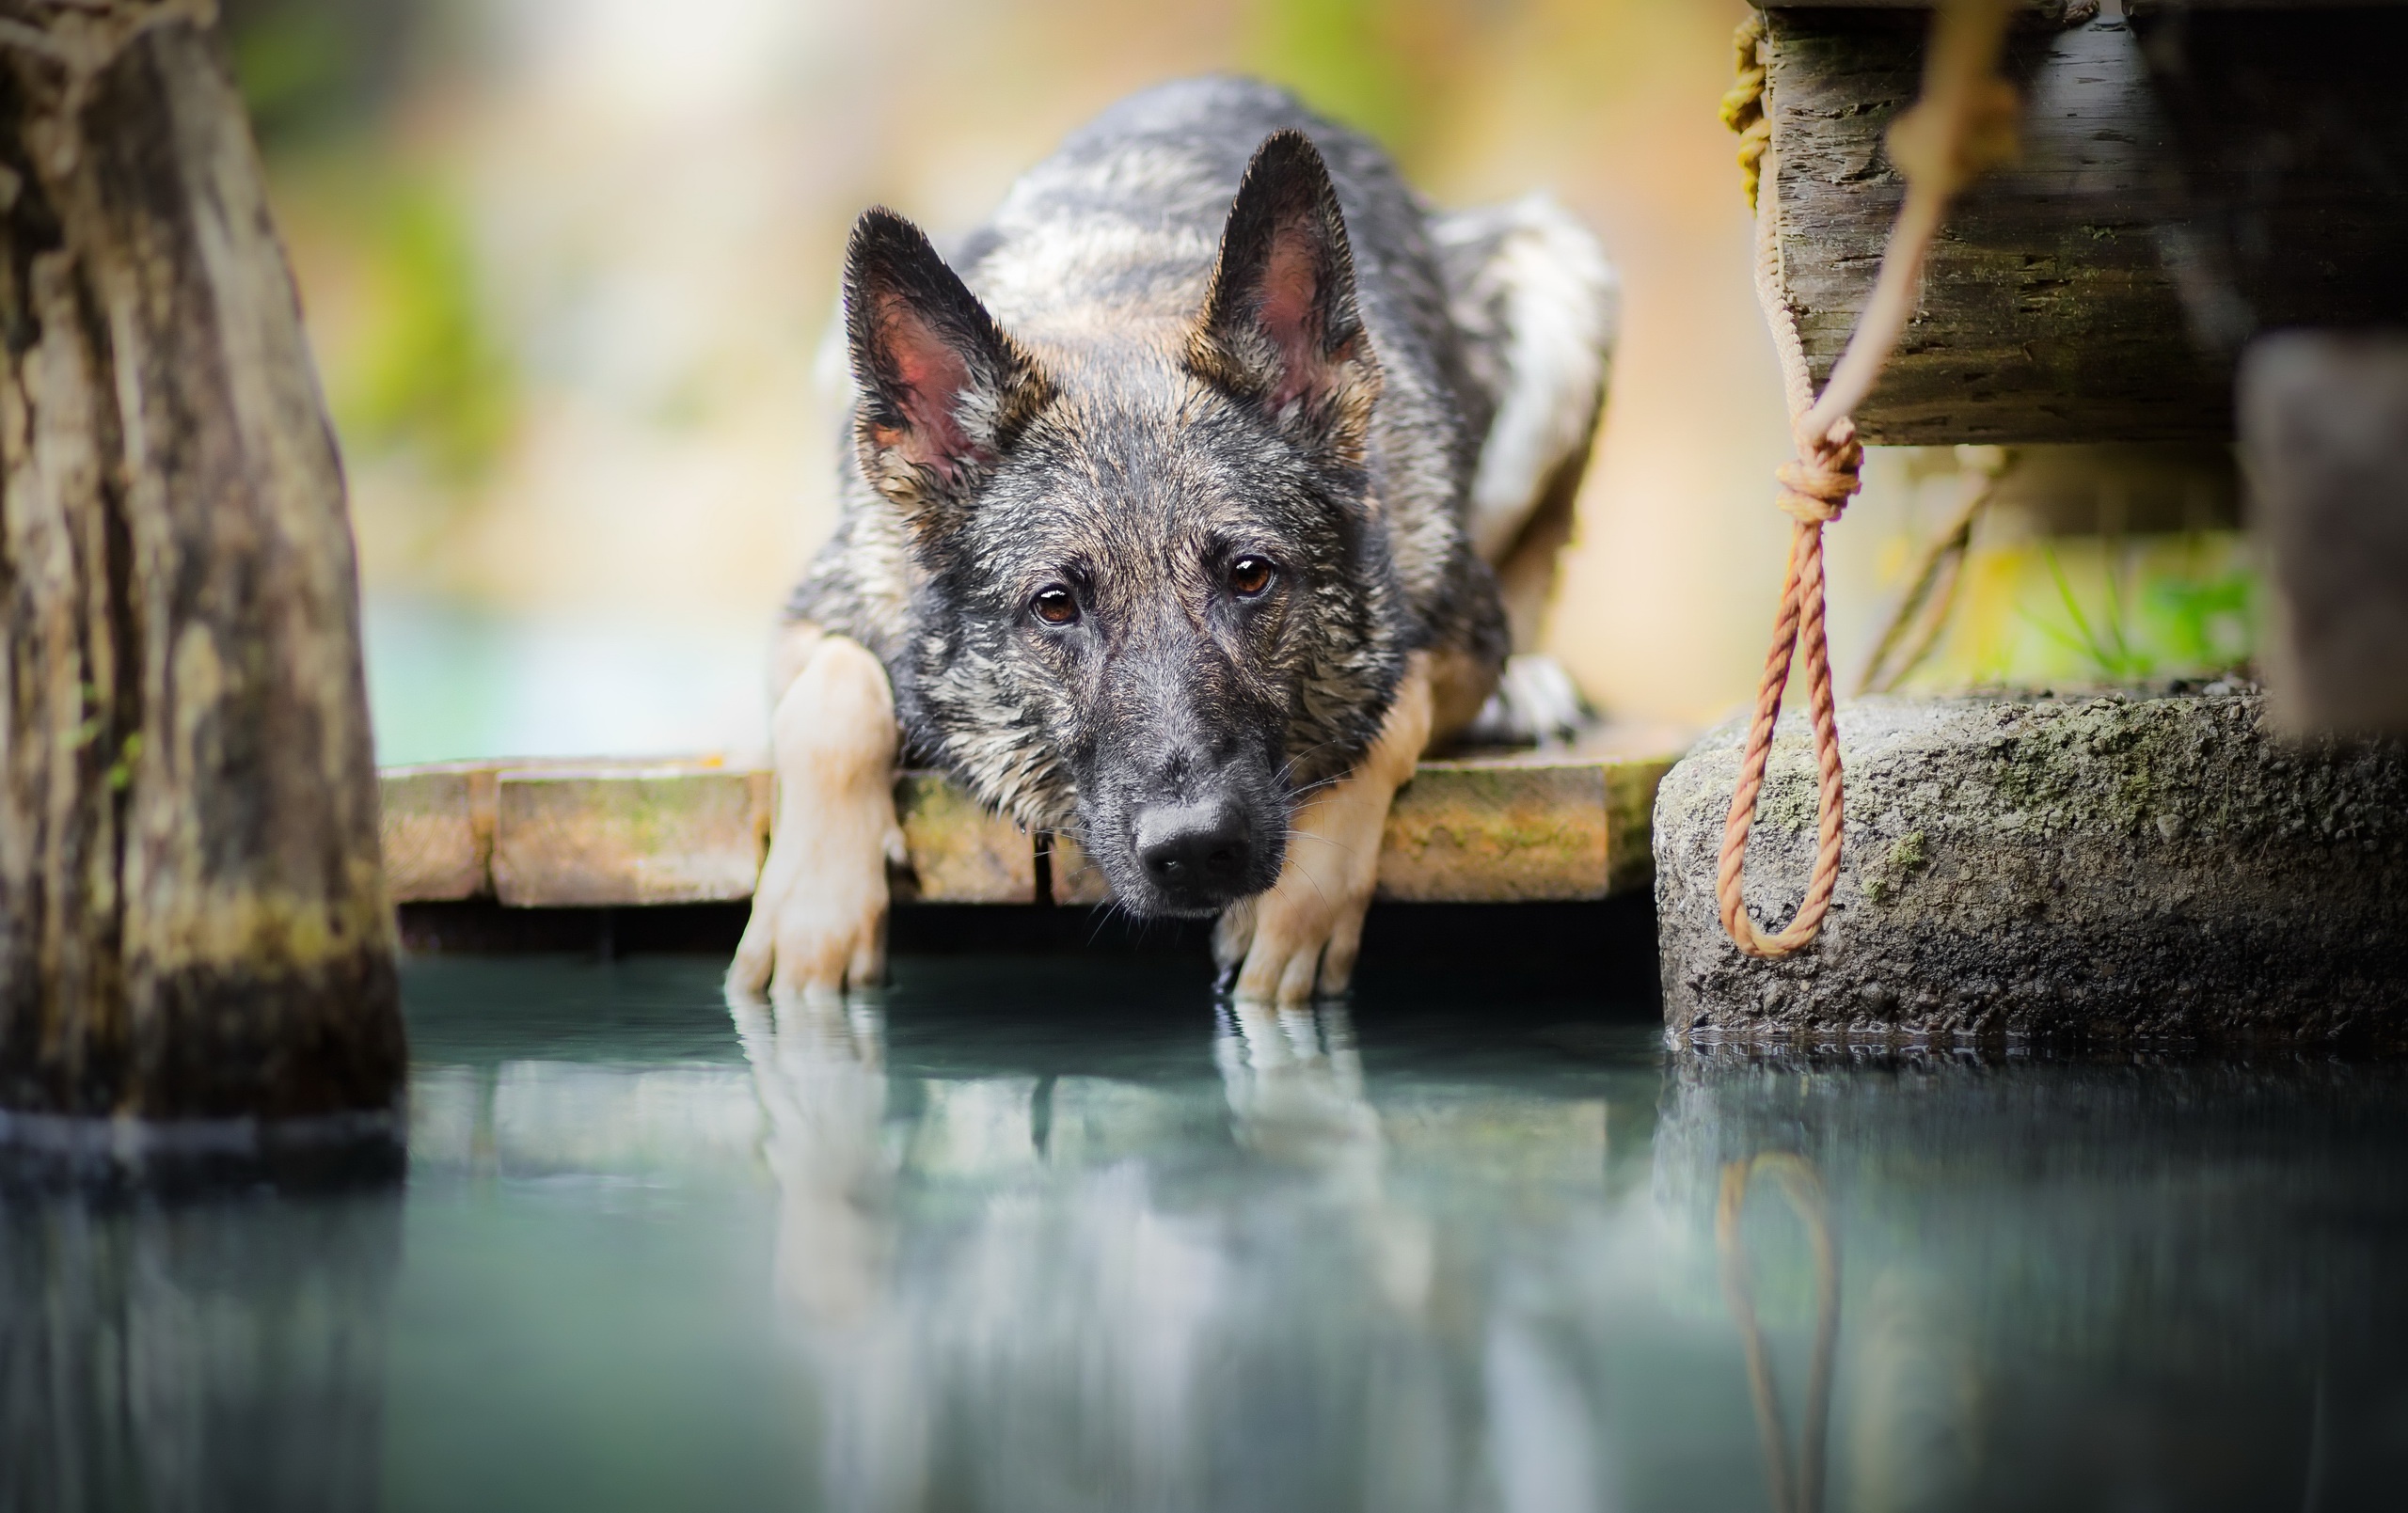 General 2560x1609 dog animals outdoors water German Shepherd dock closeup